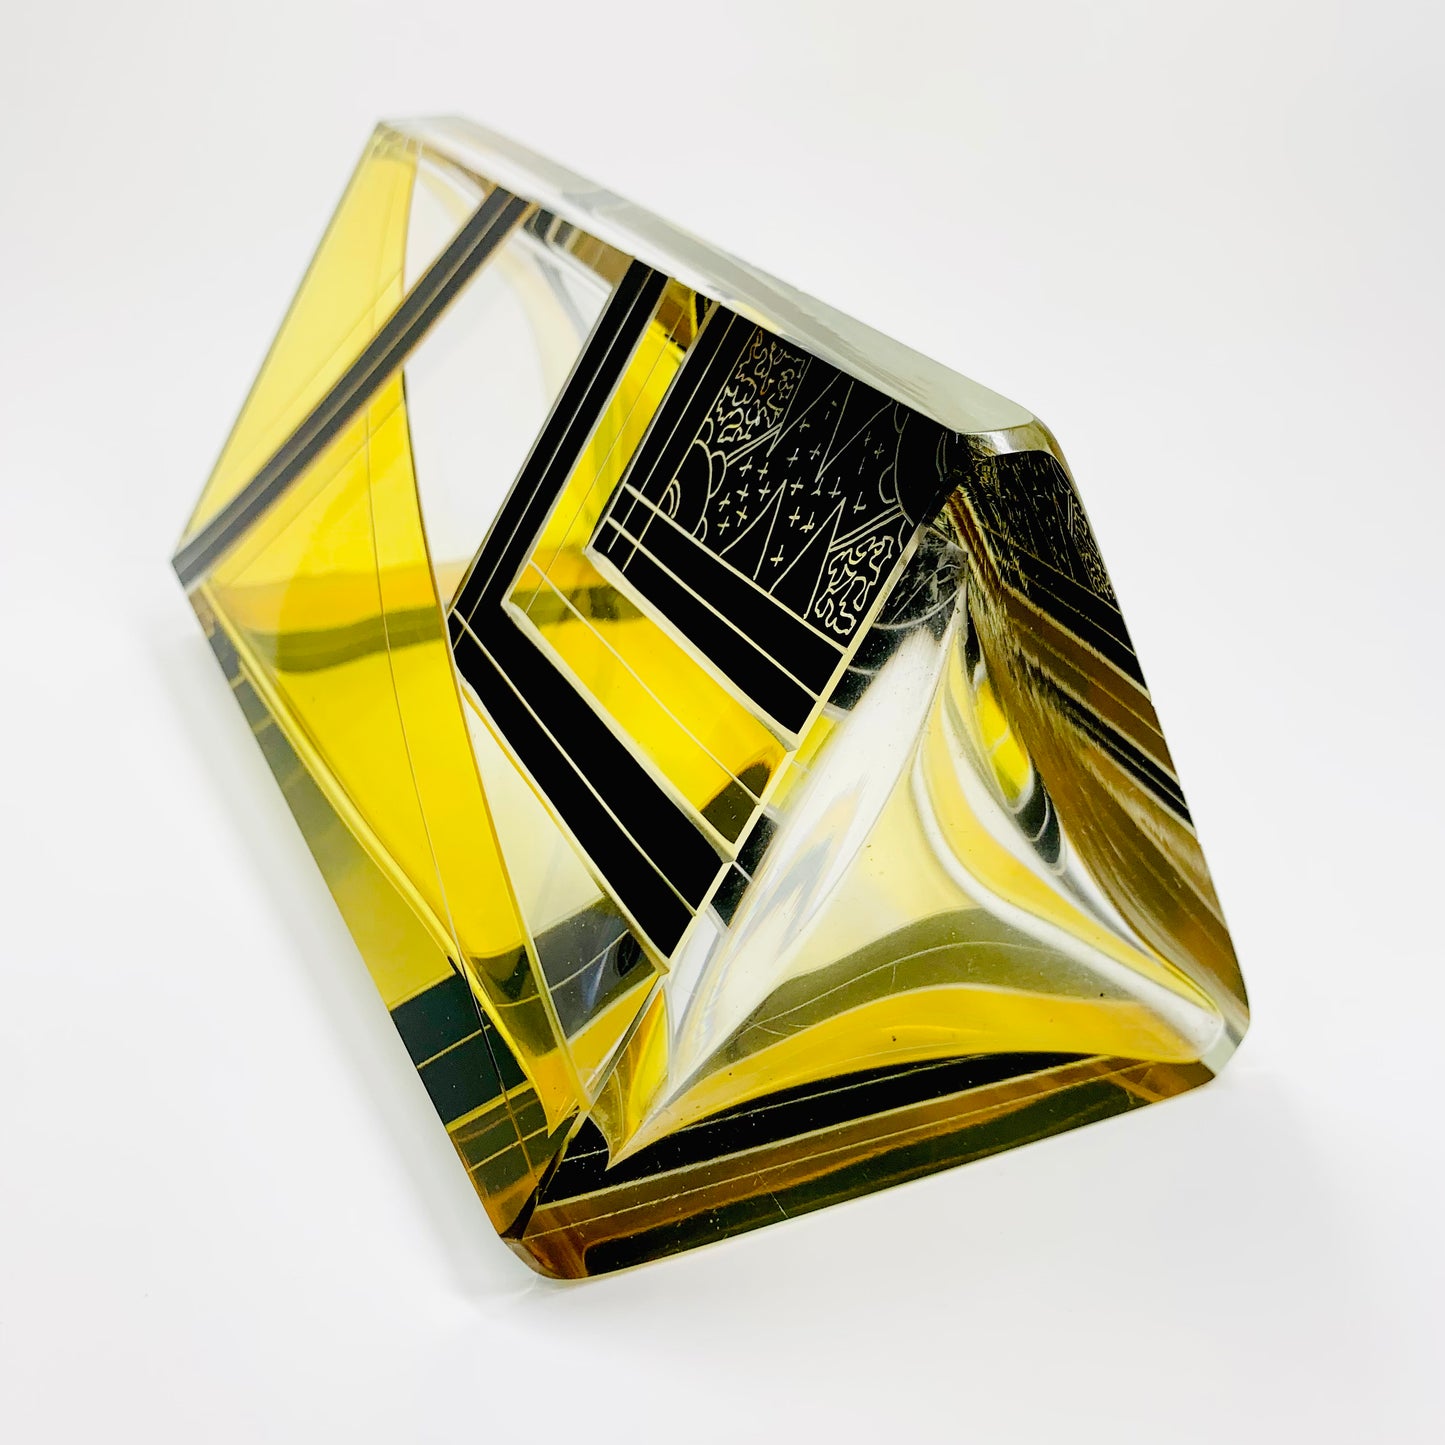 Antique Art Deco gold and black enamel triangular glass vase by Karl Palda